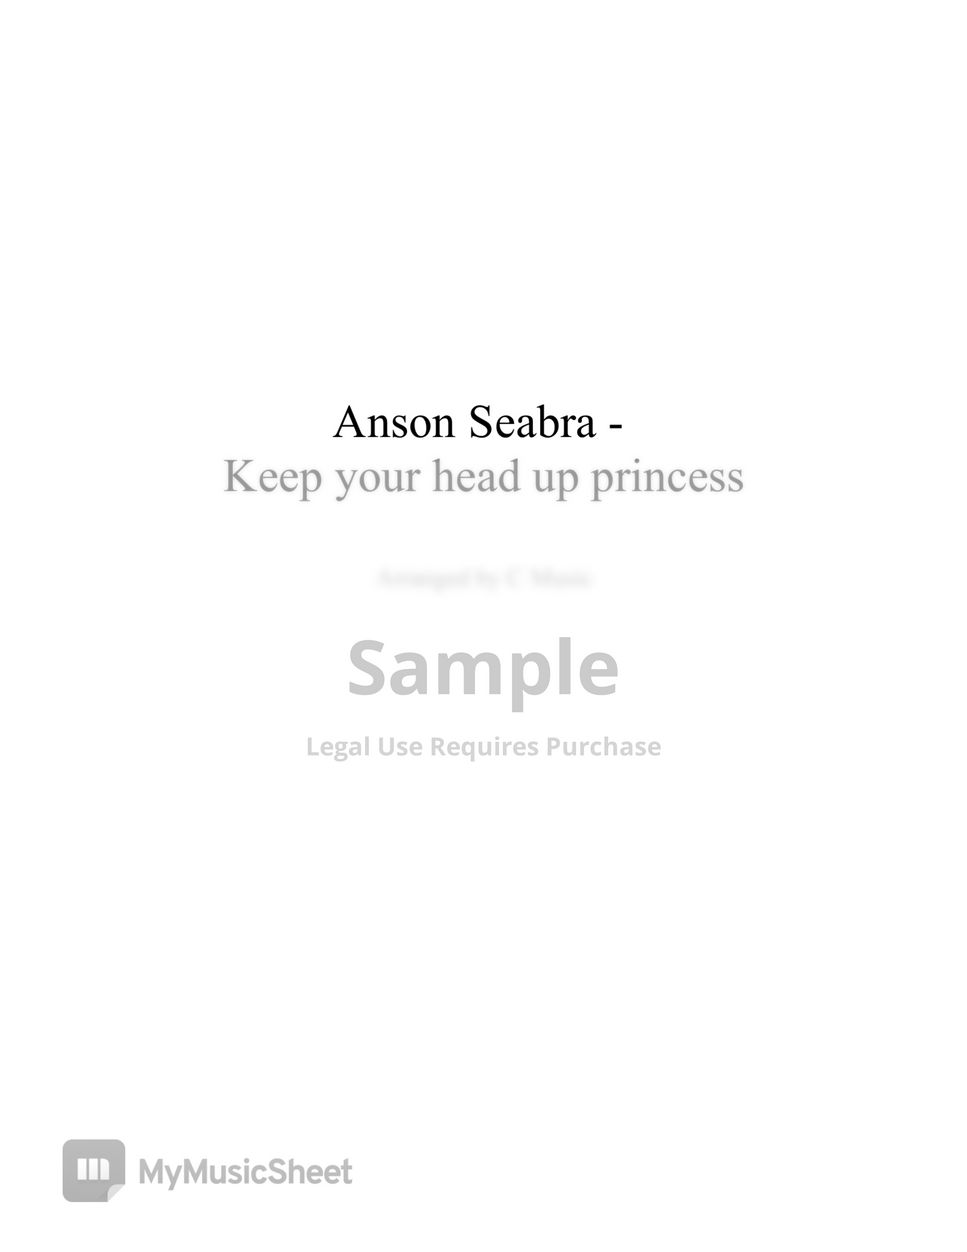 Anson Seabra - Keep your head up princess by C Music